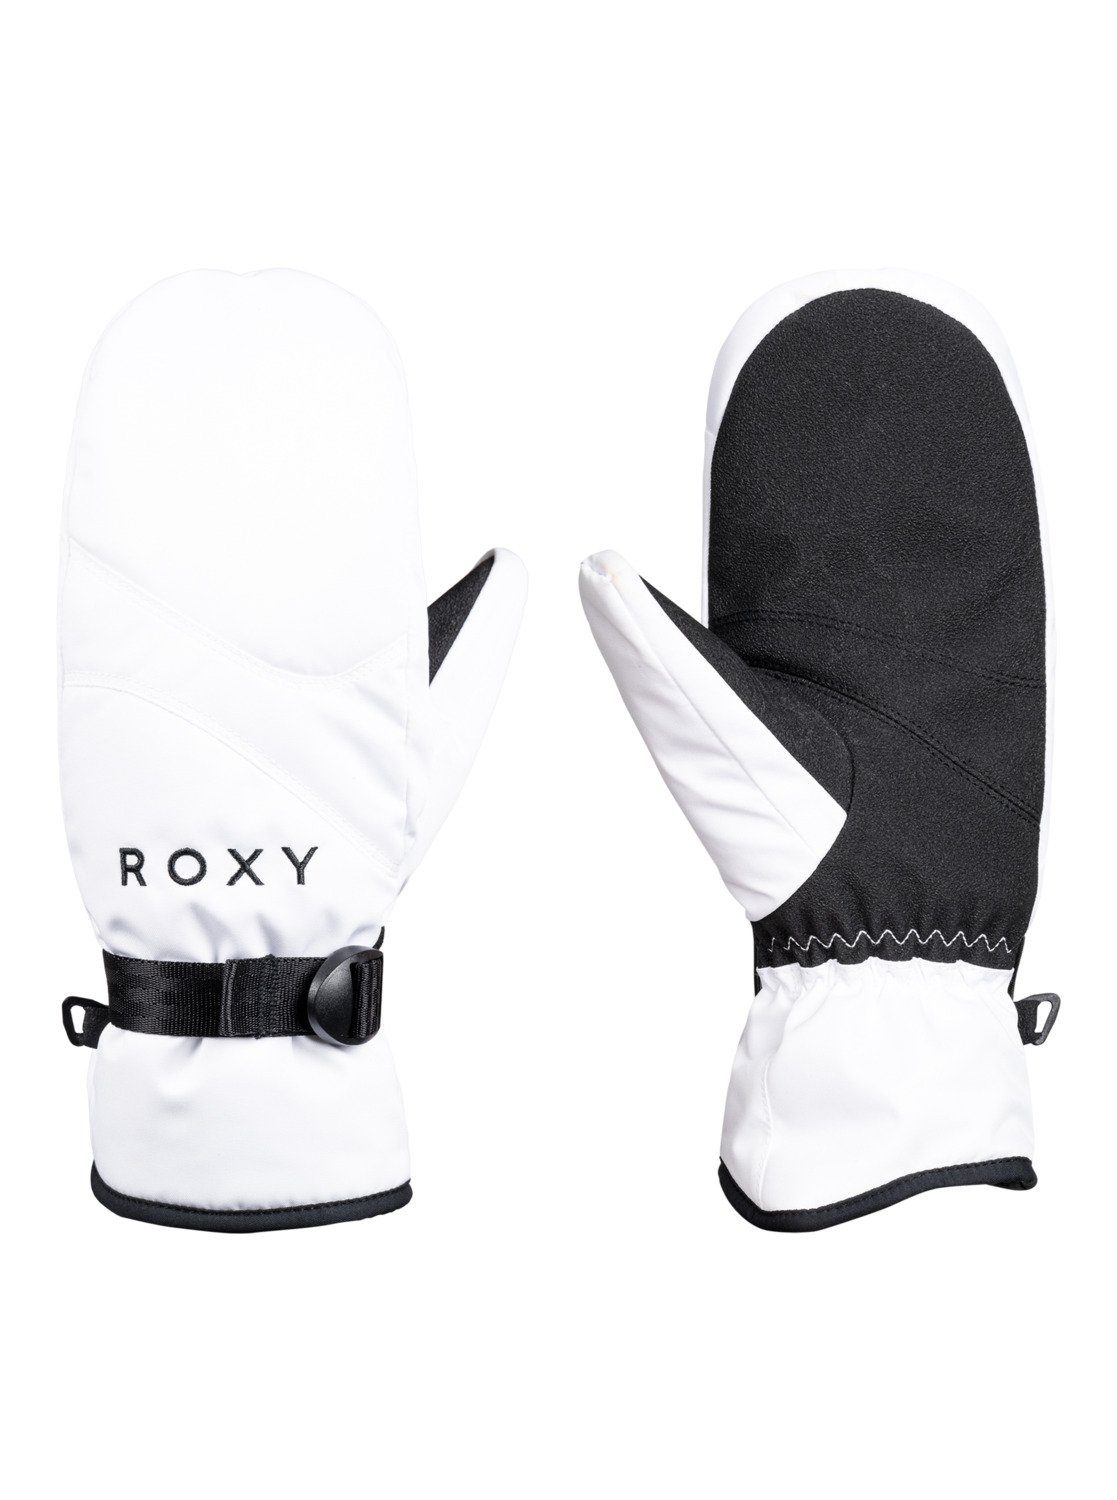 Roxy Snowboardhandschuhe ROXY White Bright Jetty